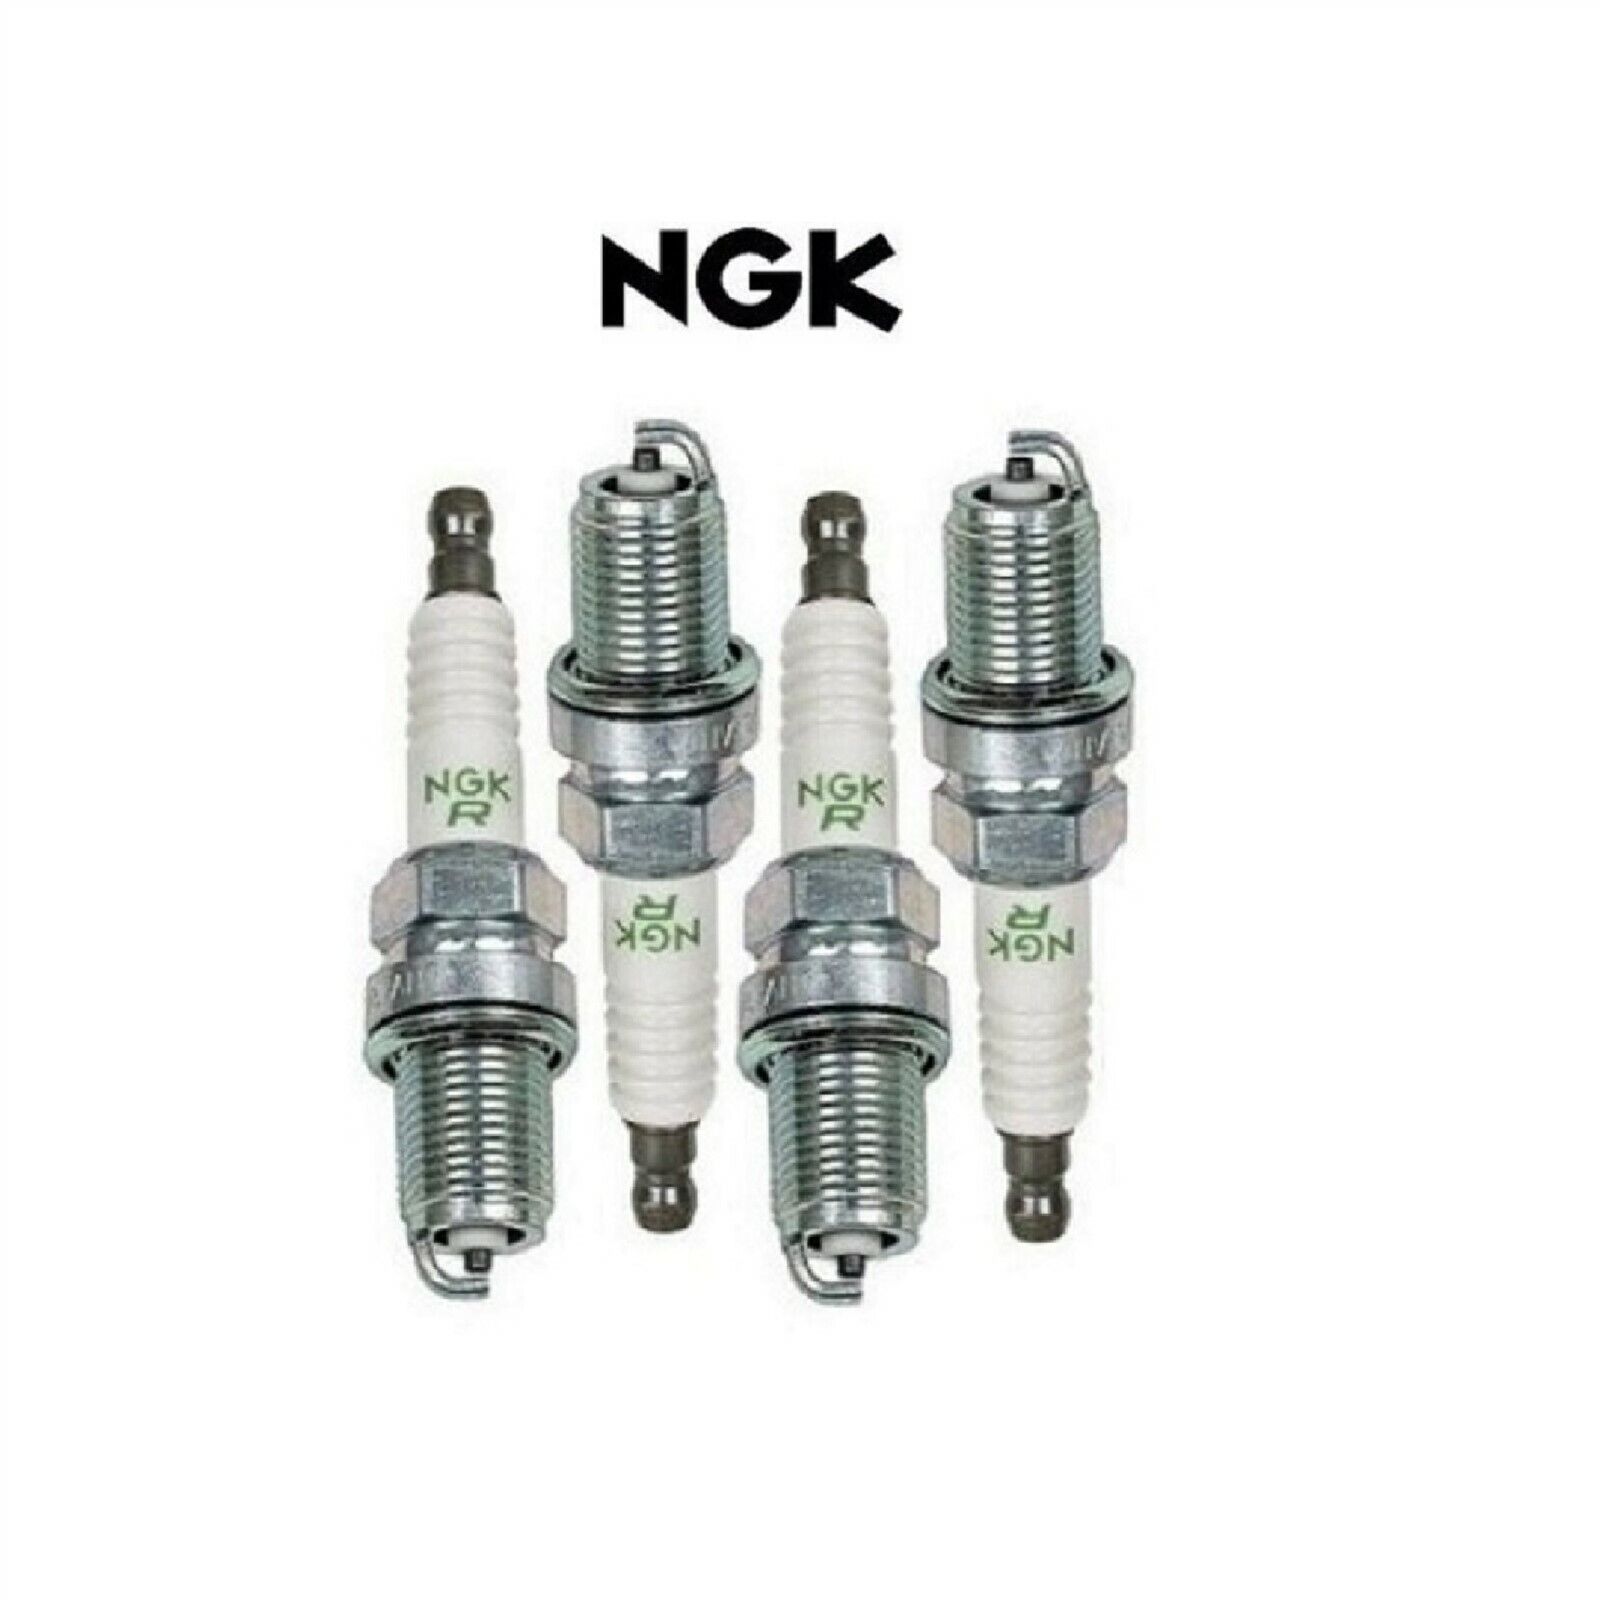 4 NGK V-Power Spark Plugs FIT CL600/CL65 AMG/G65 AMG/S600/SL65 AMG/SL600/S65 AMG